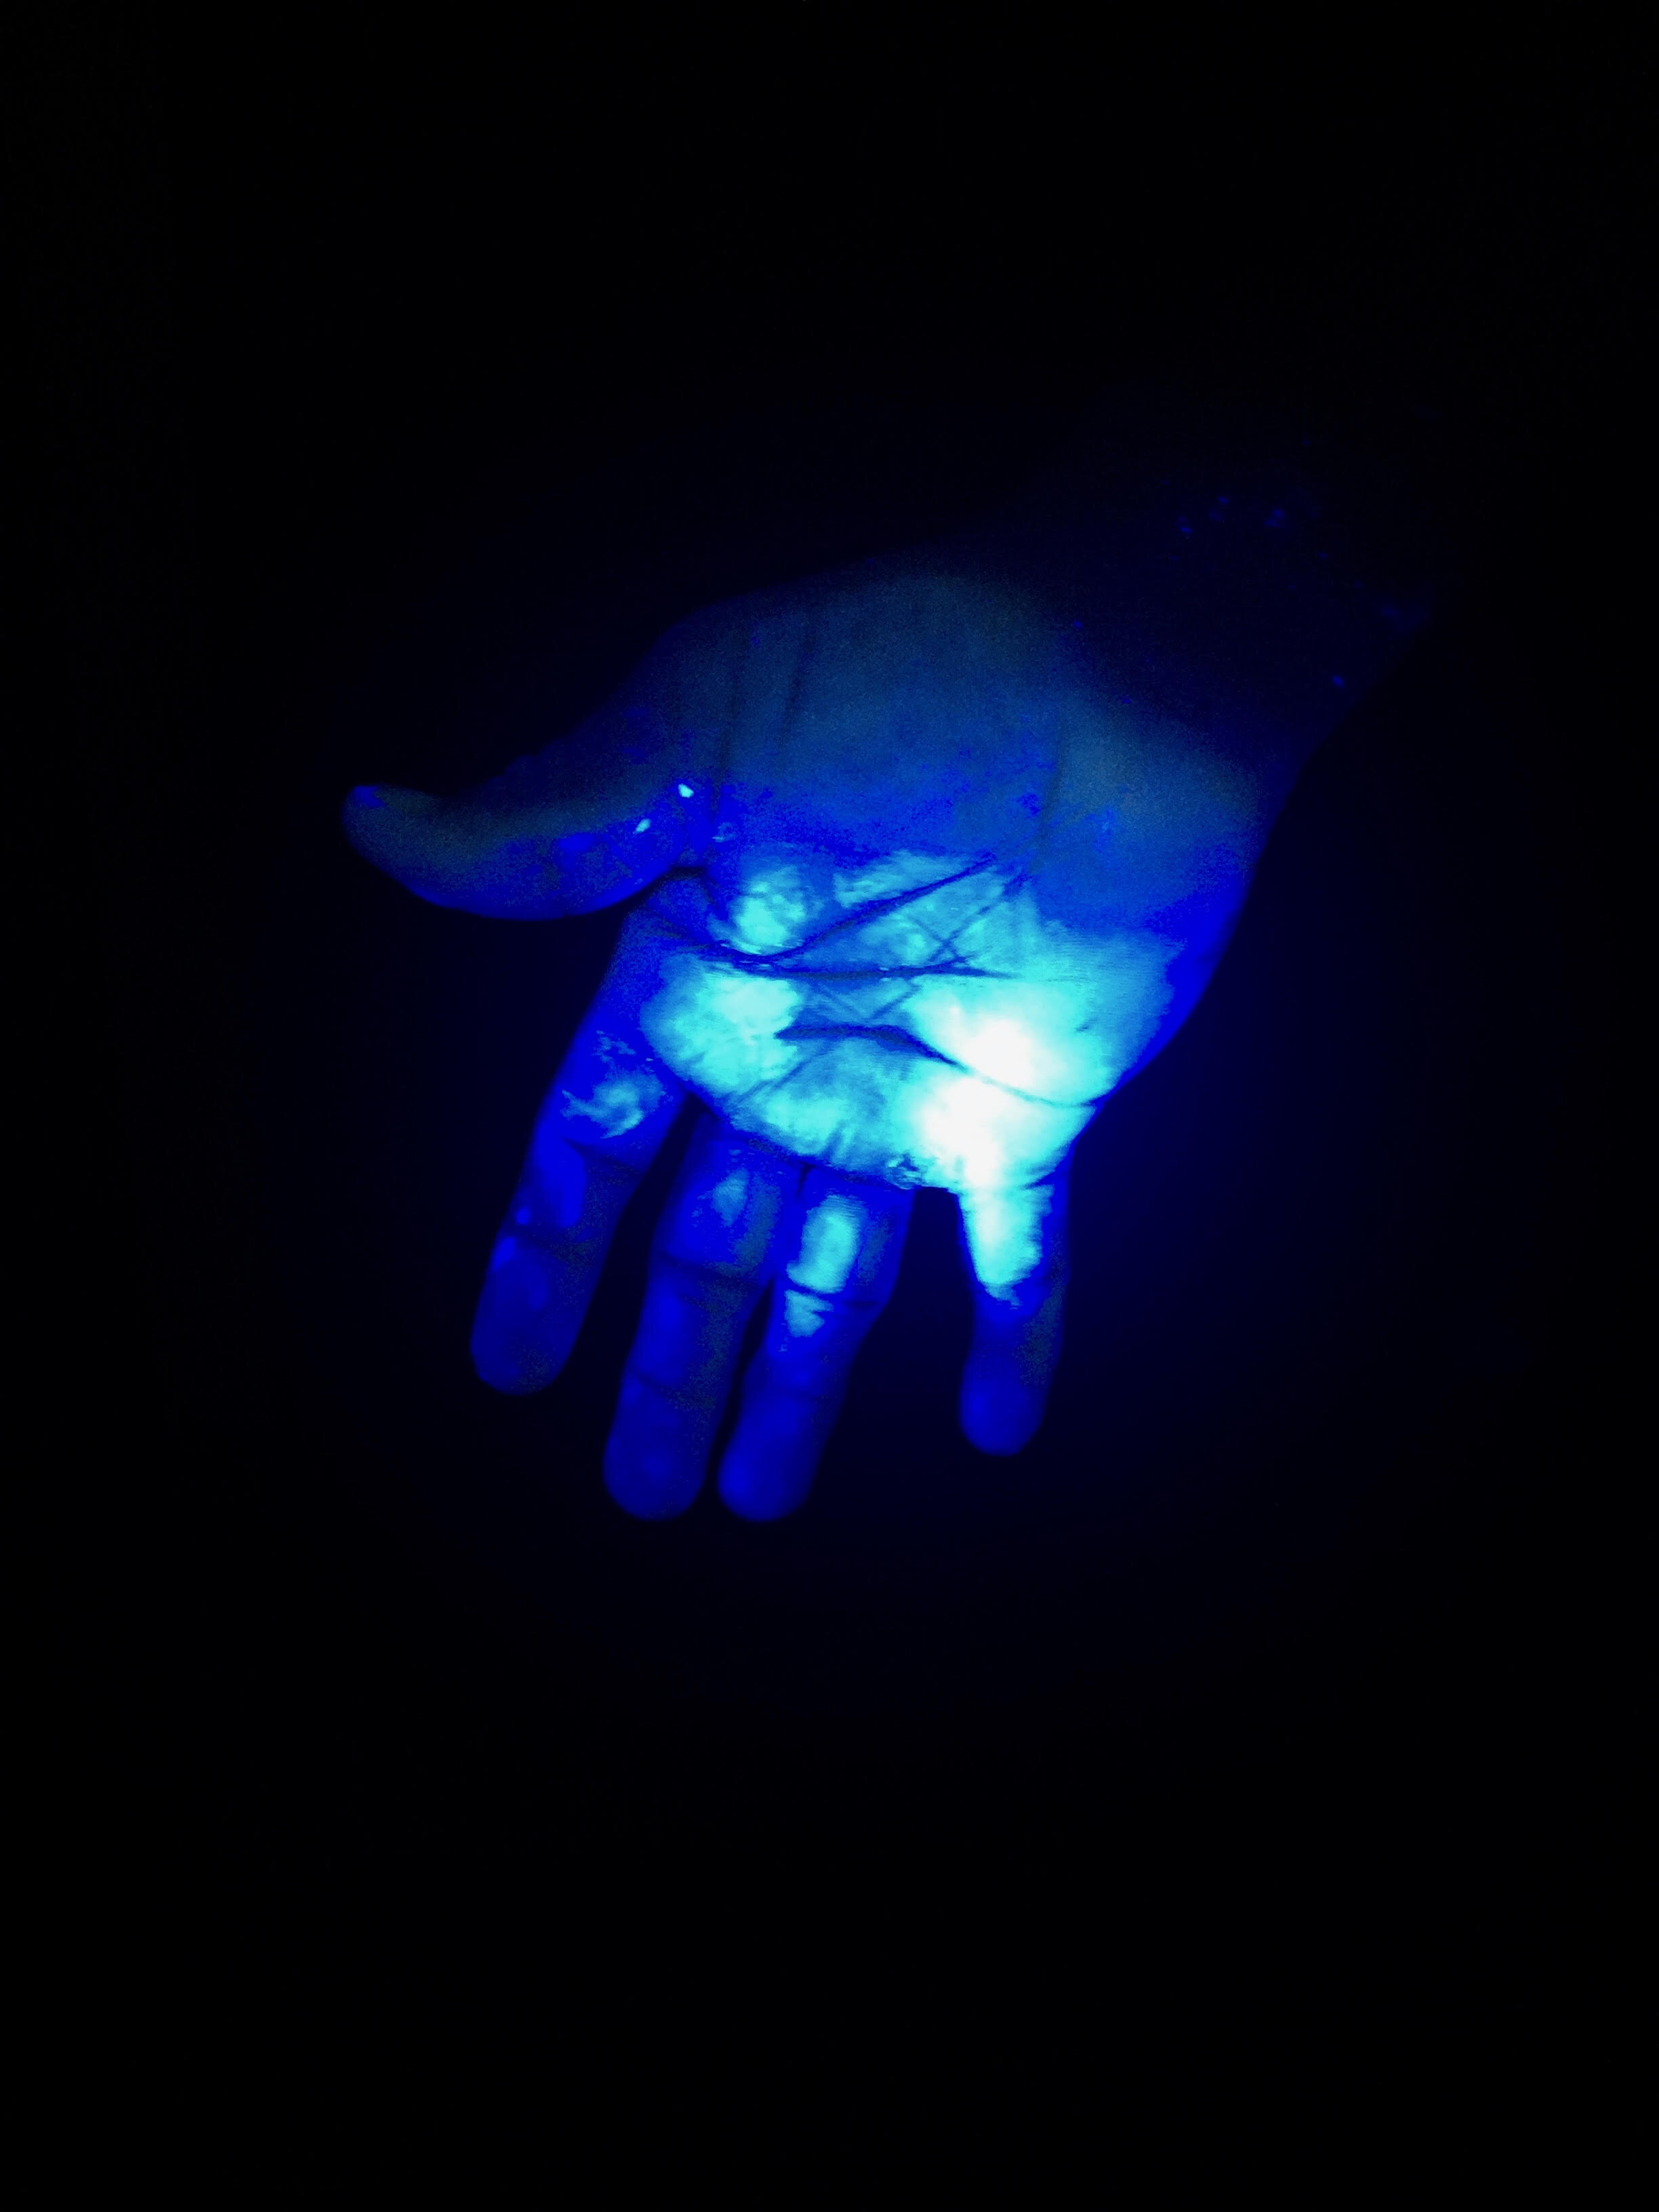 A farmer’s hand under UV light showing contamination from applying pesticides.